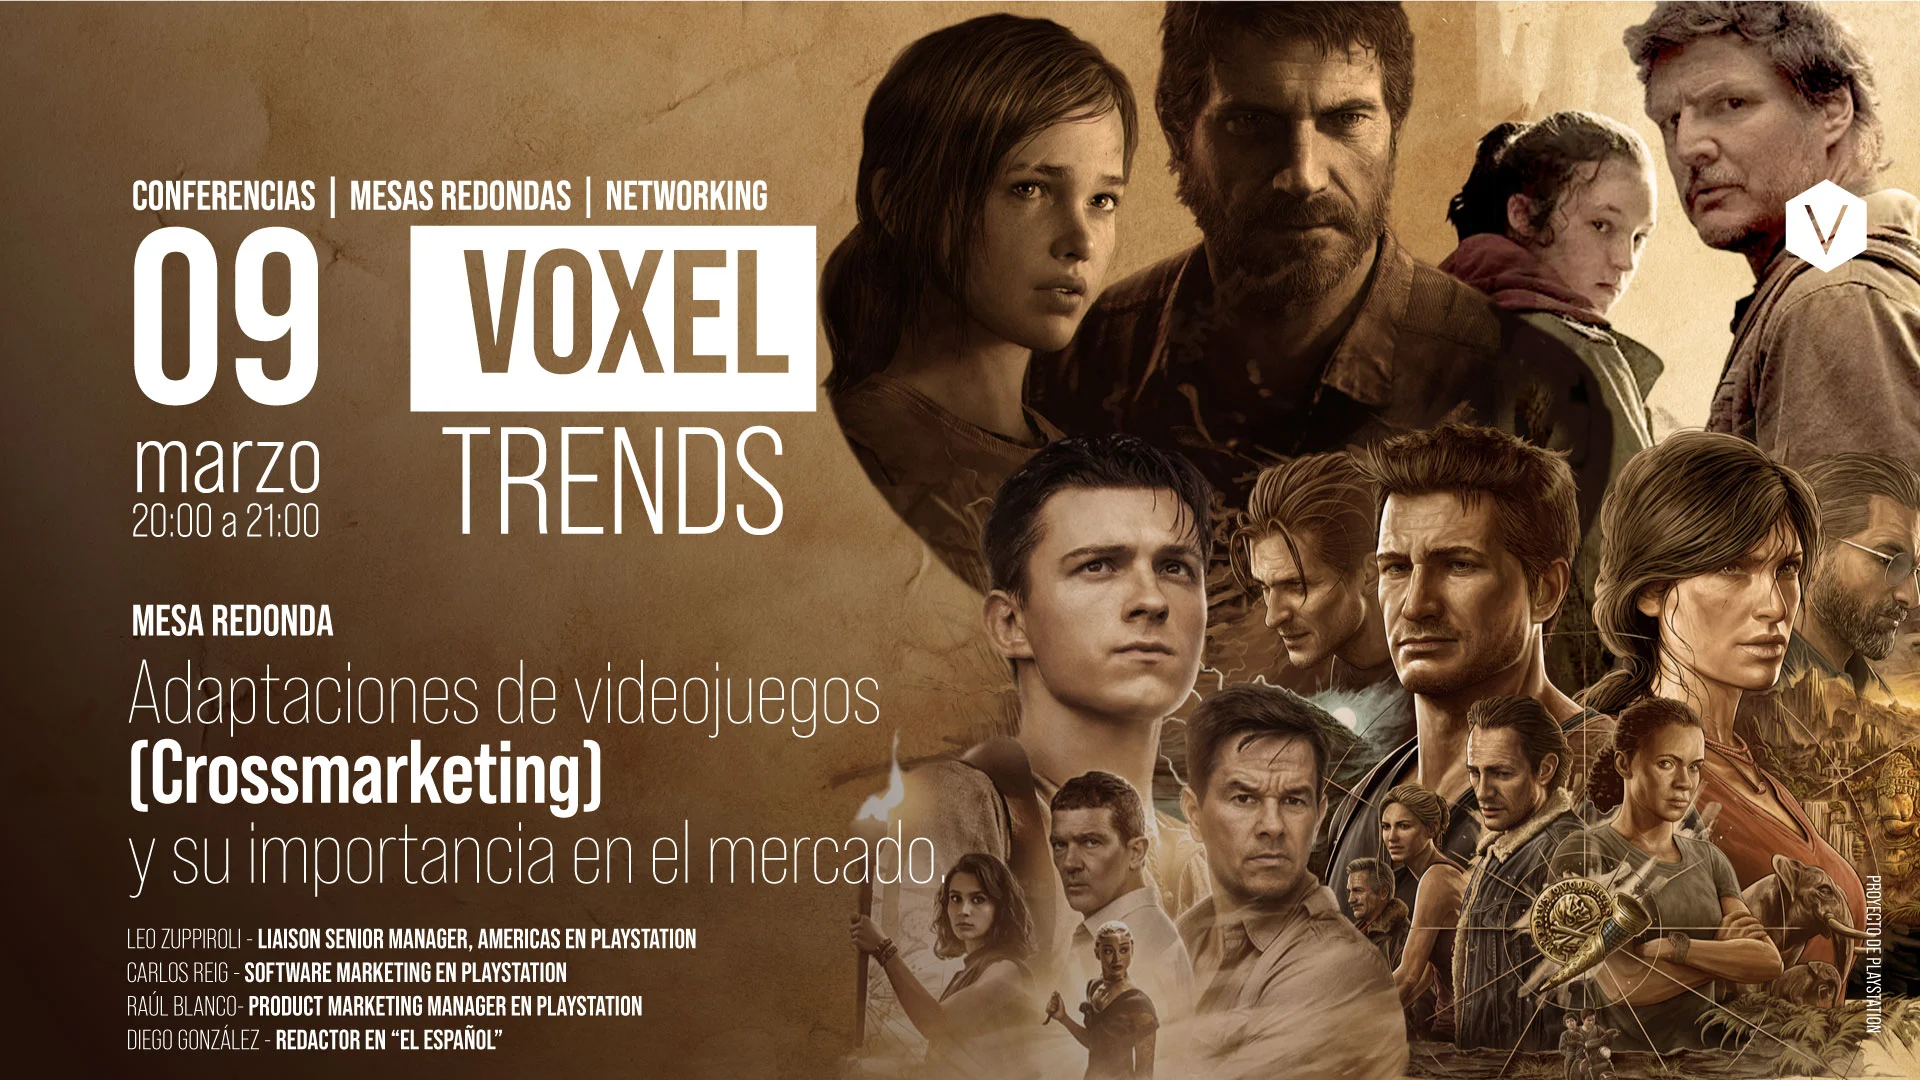 voxel_trend_marzo_mesa_redonda_6-2-1